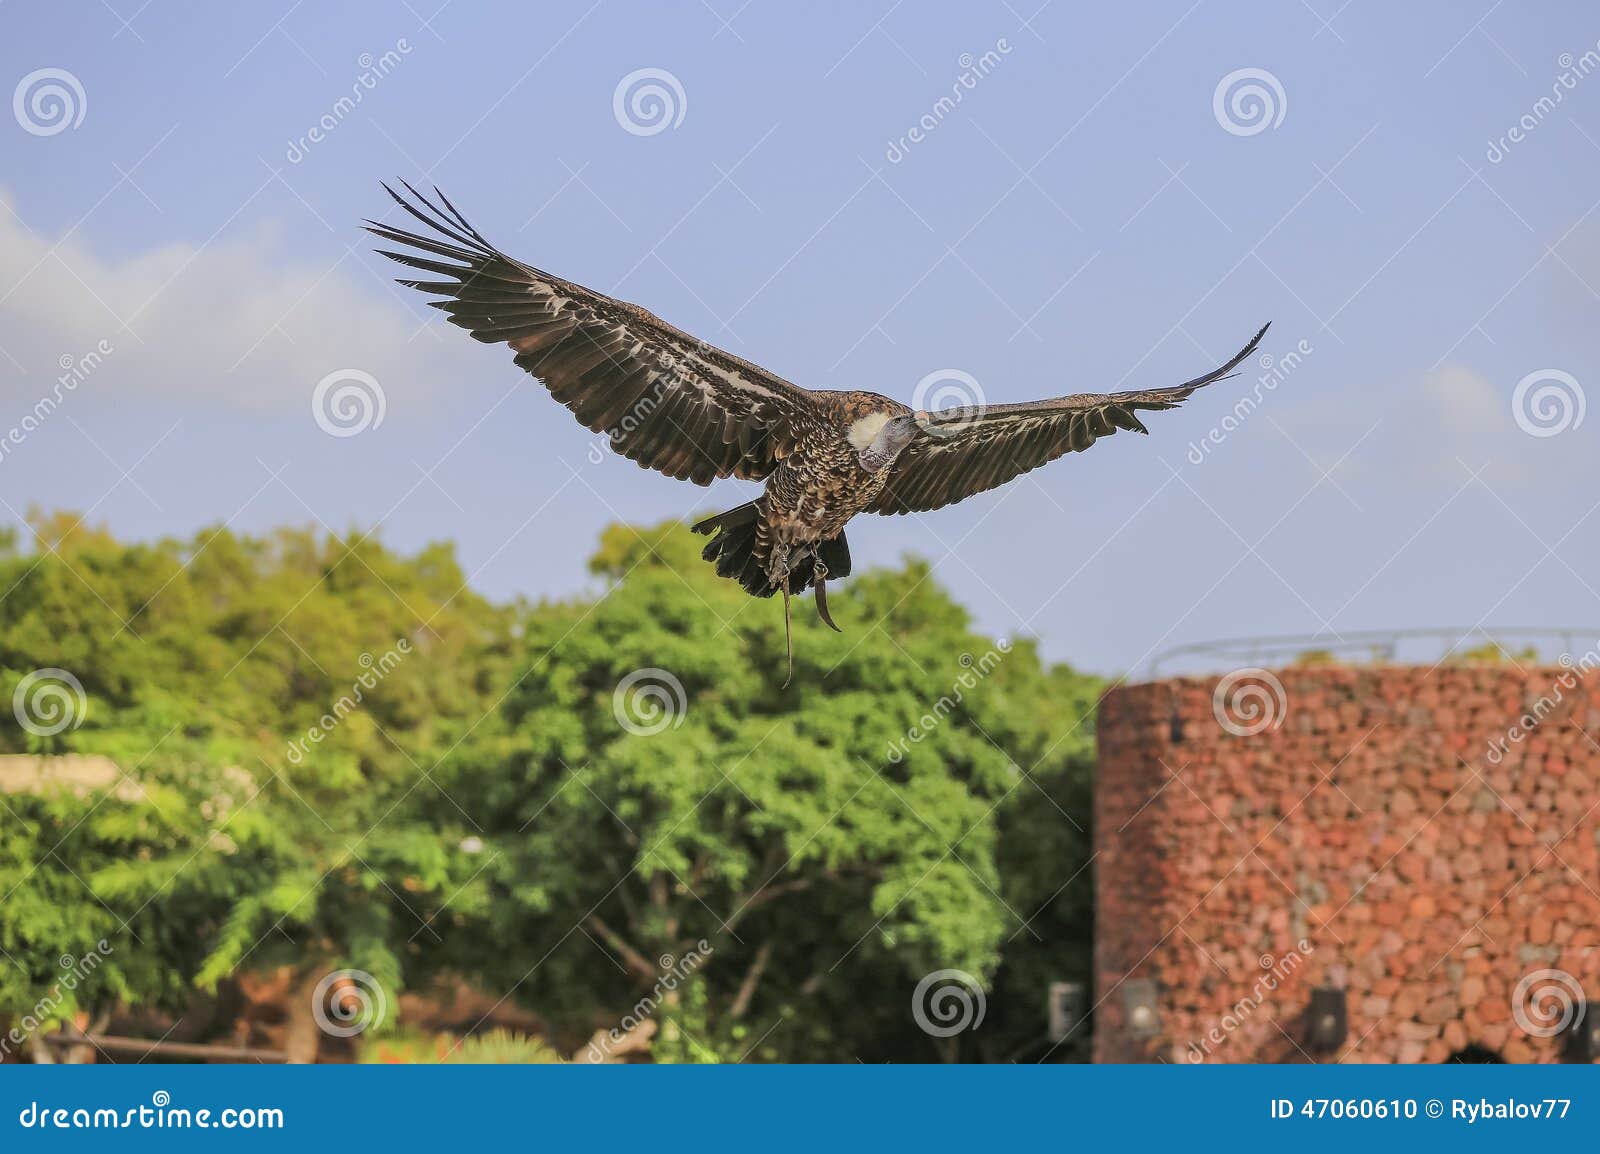 Griffon vulture stock photo. Image of cute, gyps, falconry - 47060610